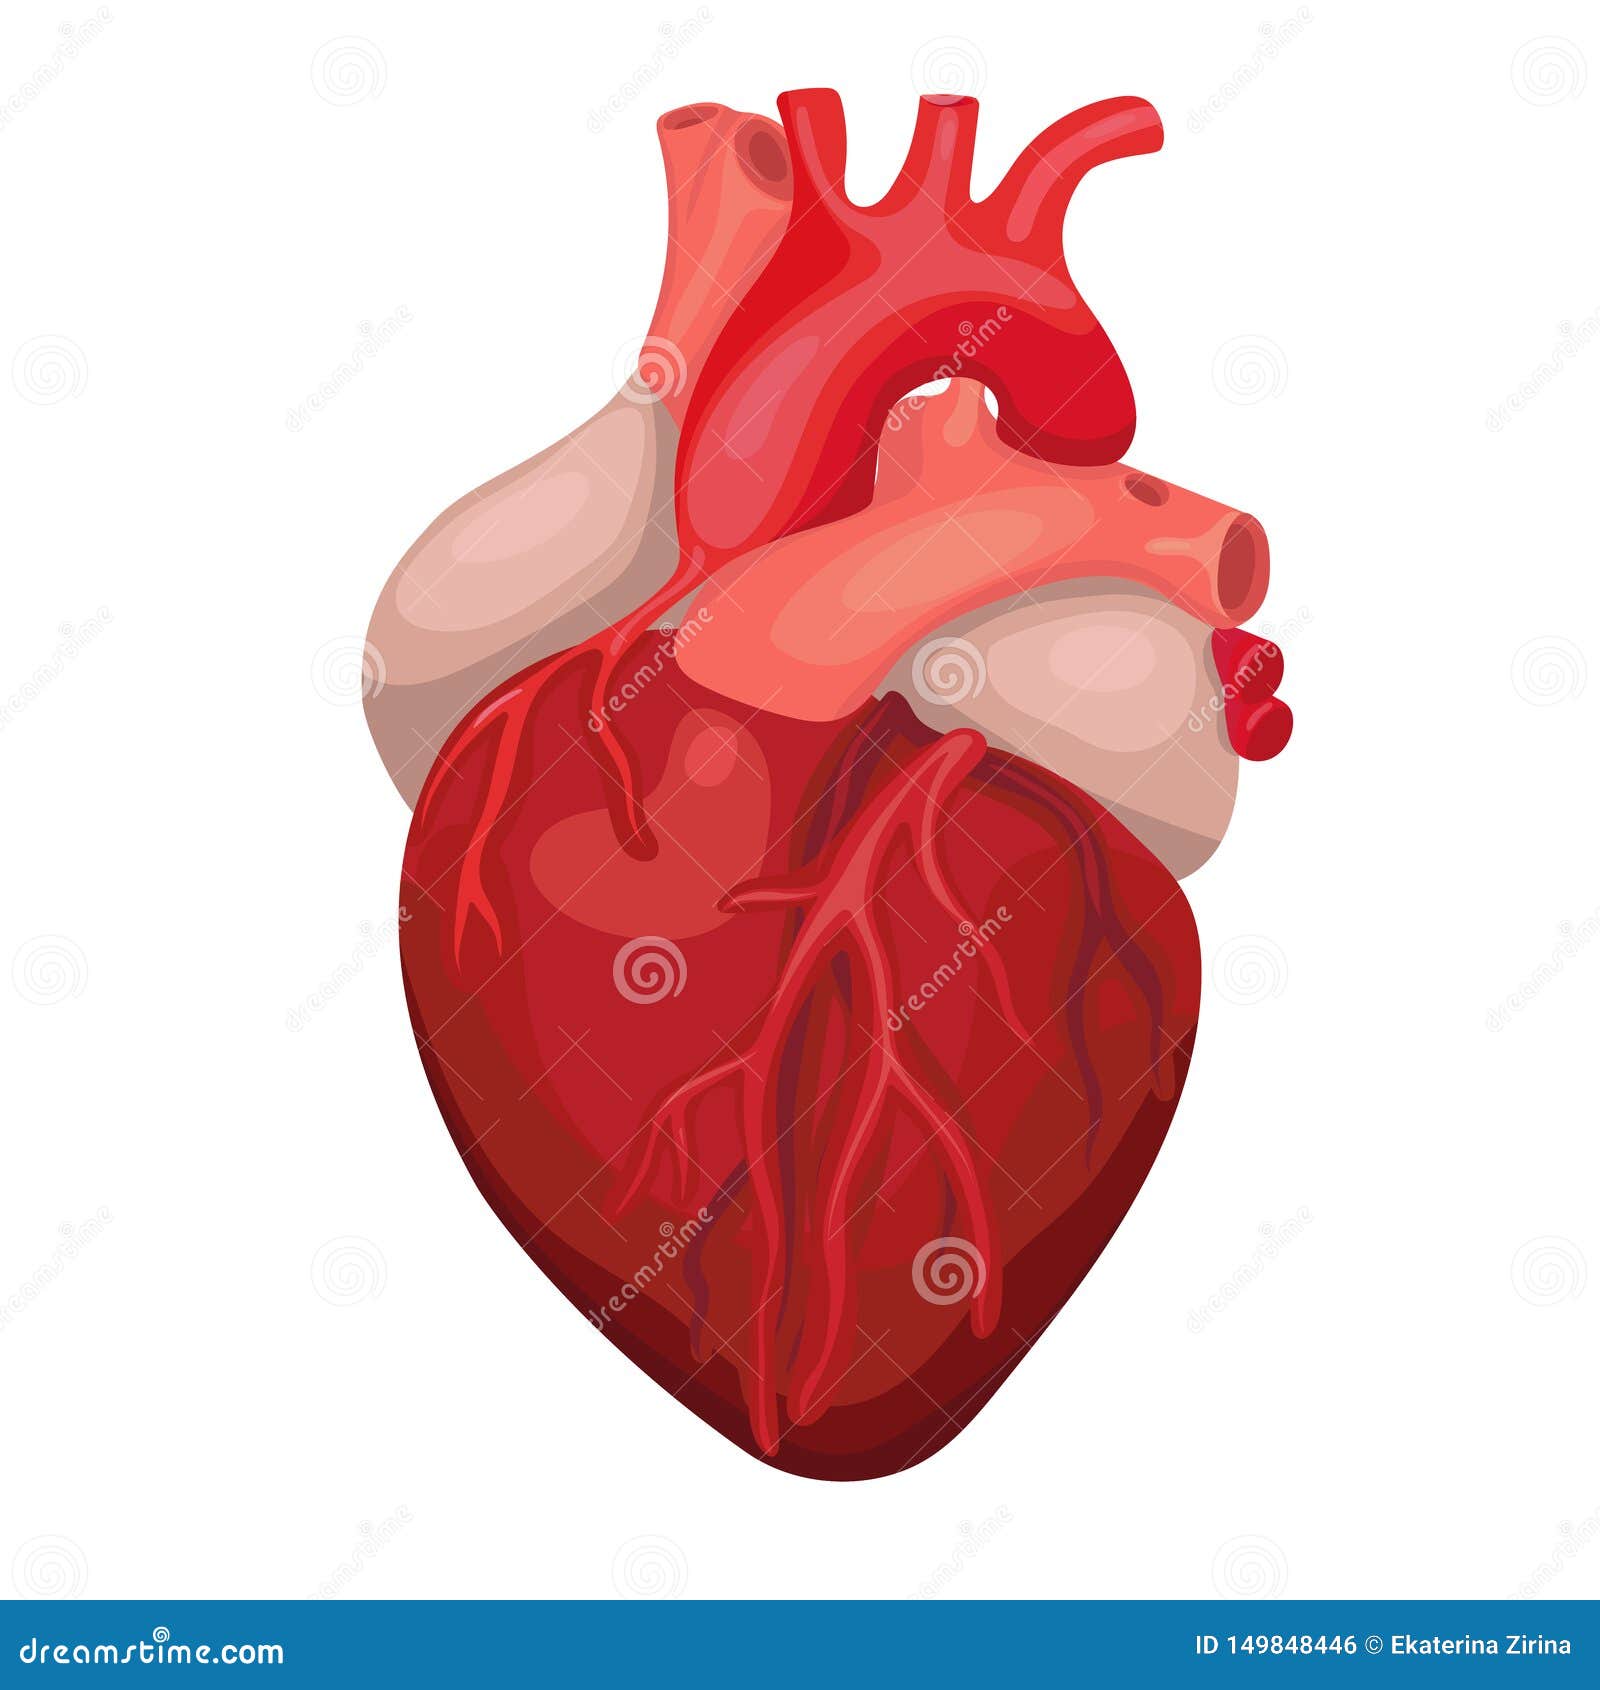 Anatomical Heart Isolated. Heart Diagnostic Center Sign. Human Heart Cartoon  Design. Vector Image Stock Illustration - Illustration of medicine, health:  149848446